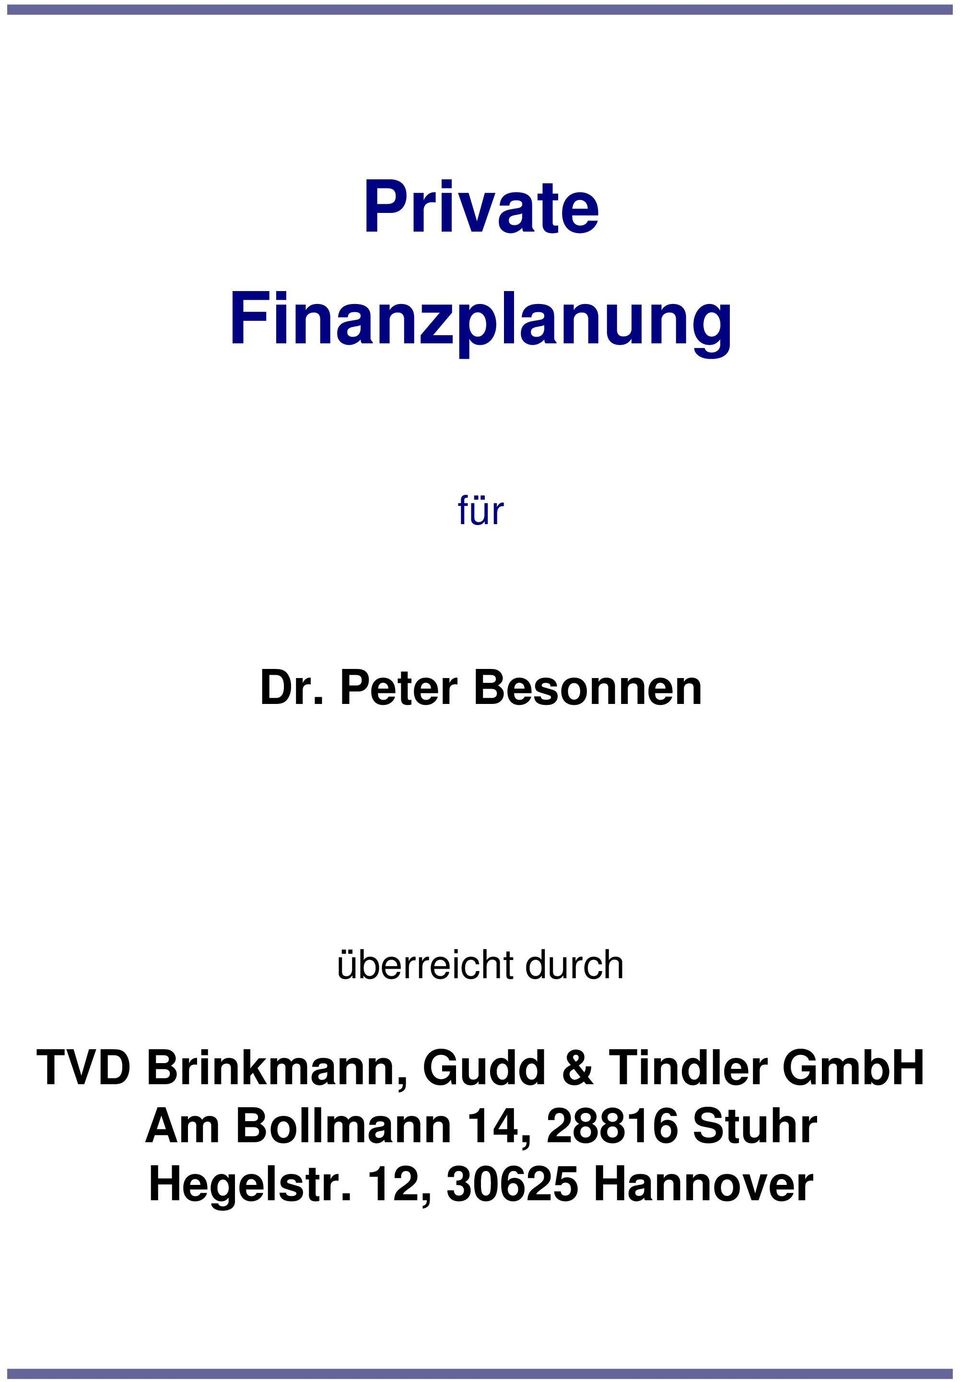 Brinkmann, Gudd & Tindler GmbH Am